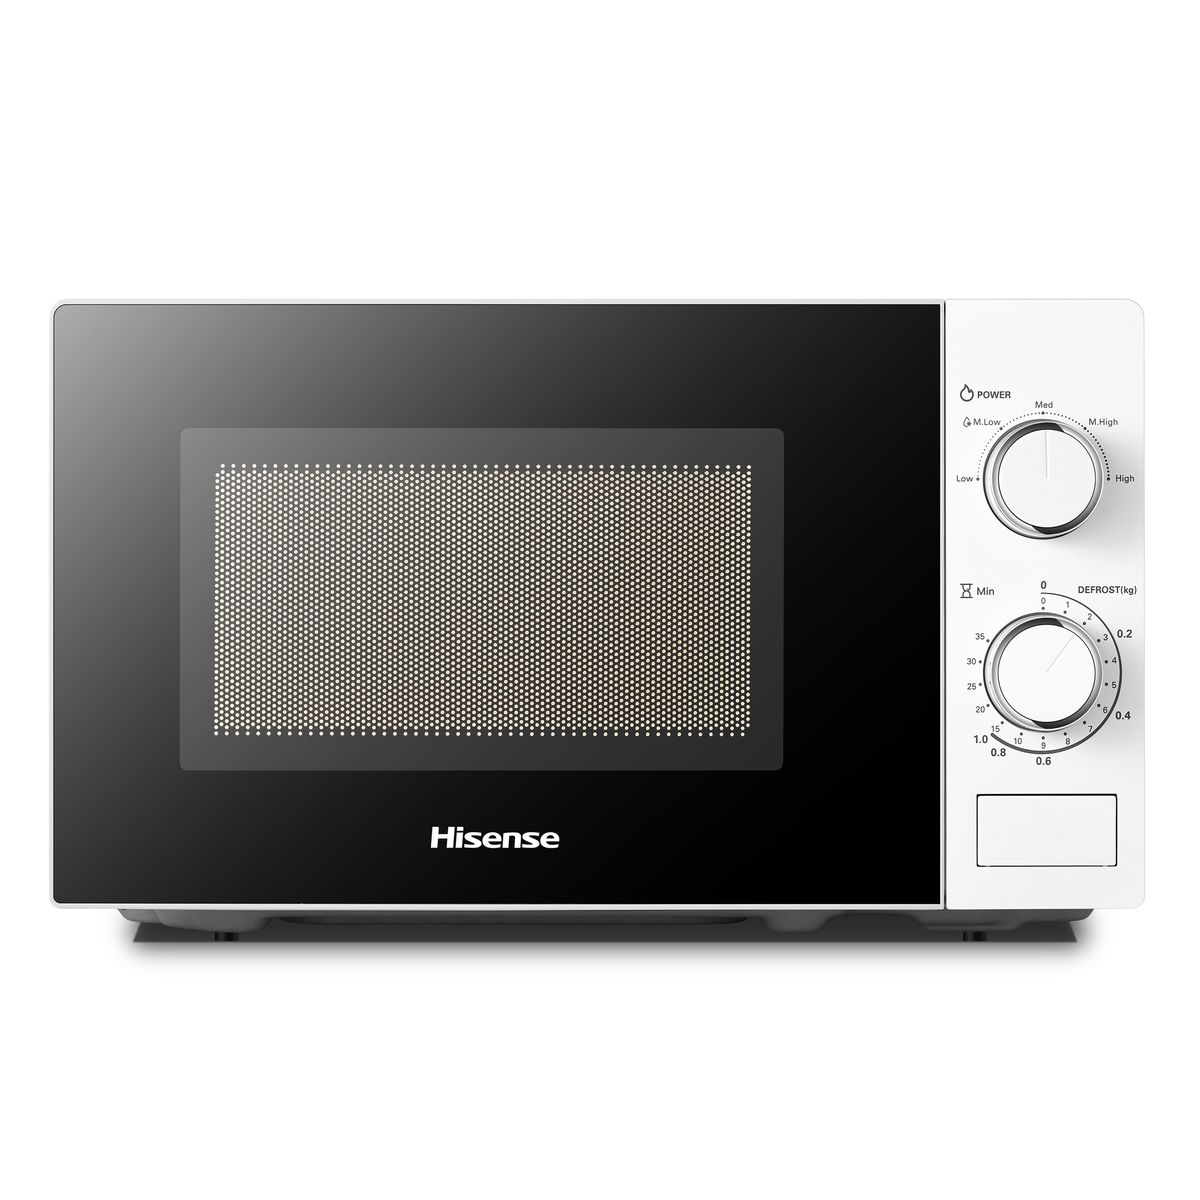 Hisense 20L Microwave Oven - White